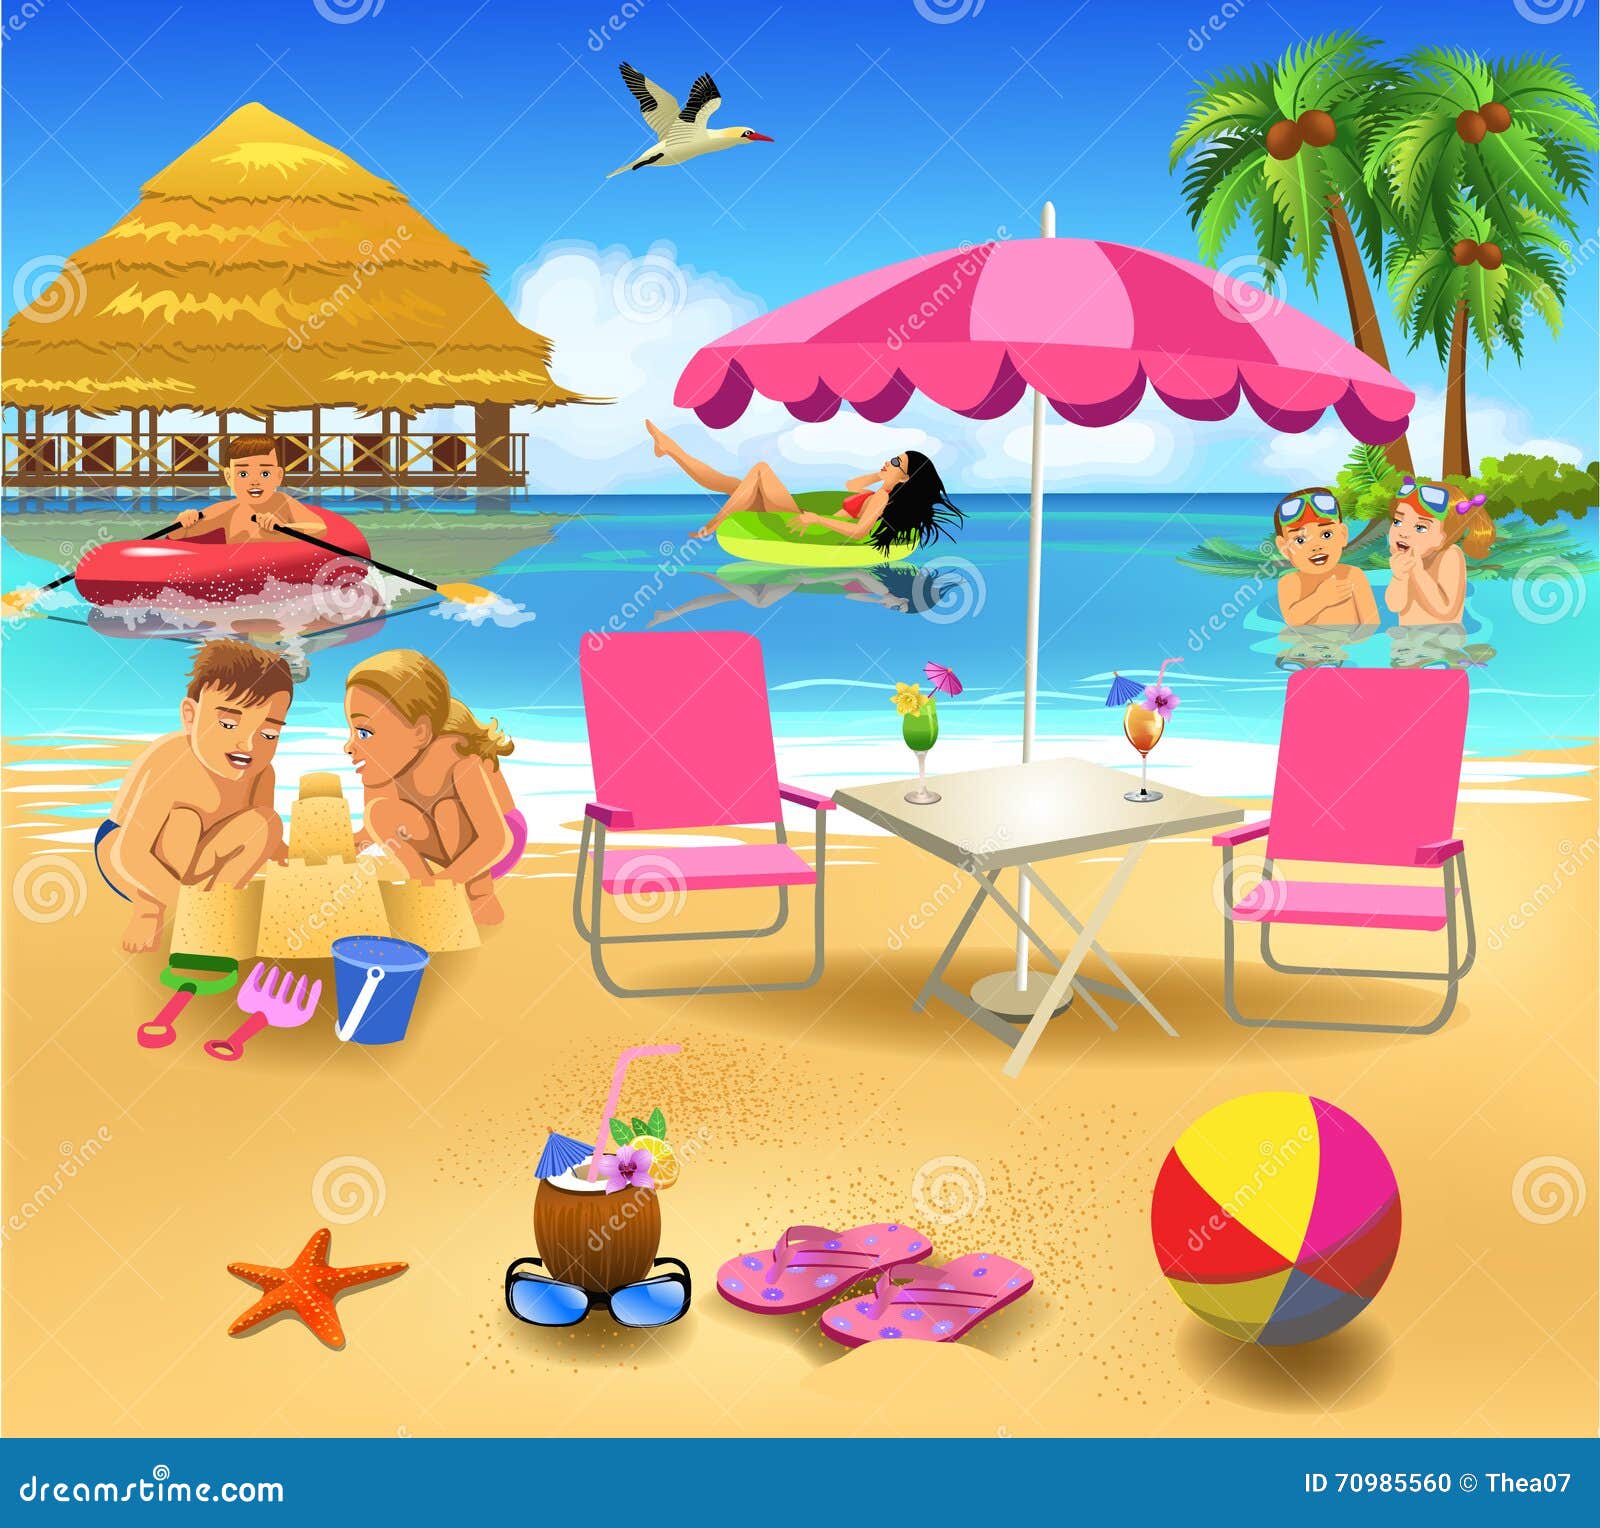 People Having Fun on Summer Vacation Stock Vector - Illustration of cartoon,  elements: 70985560